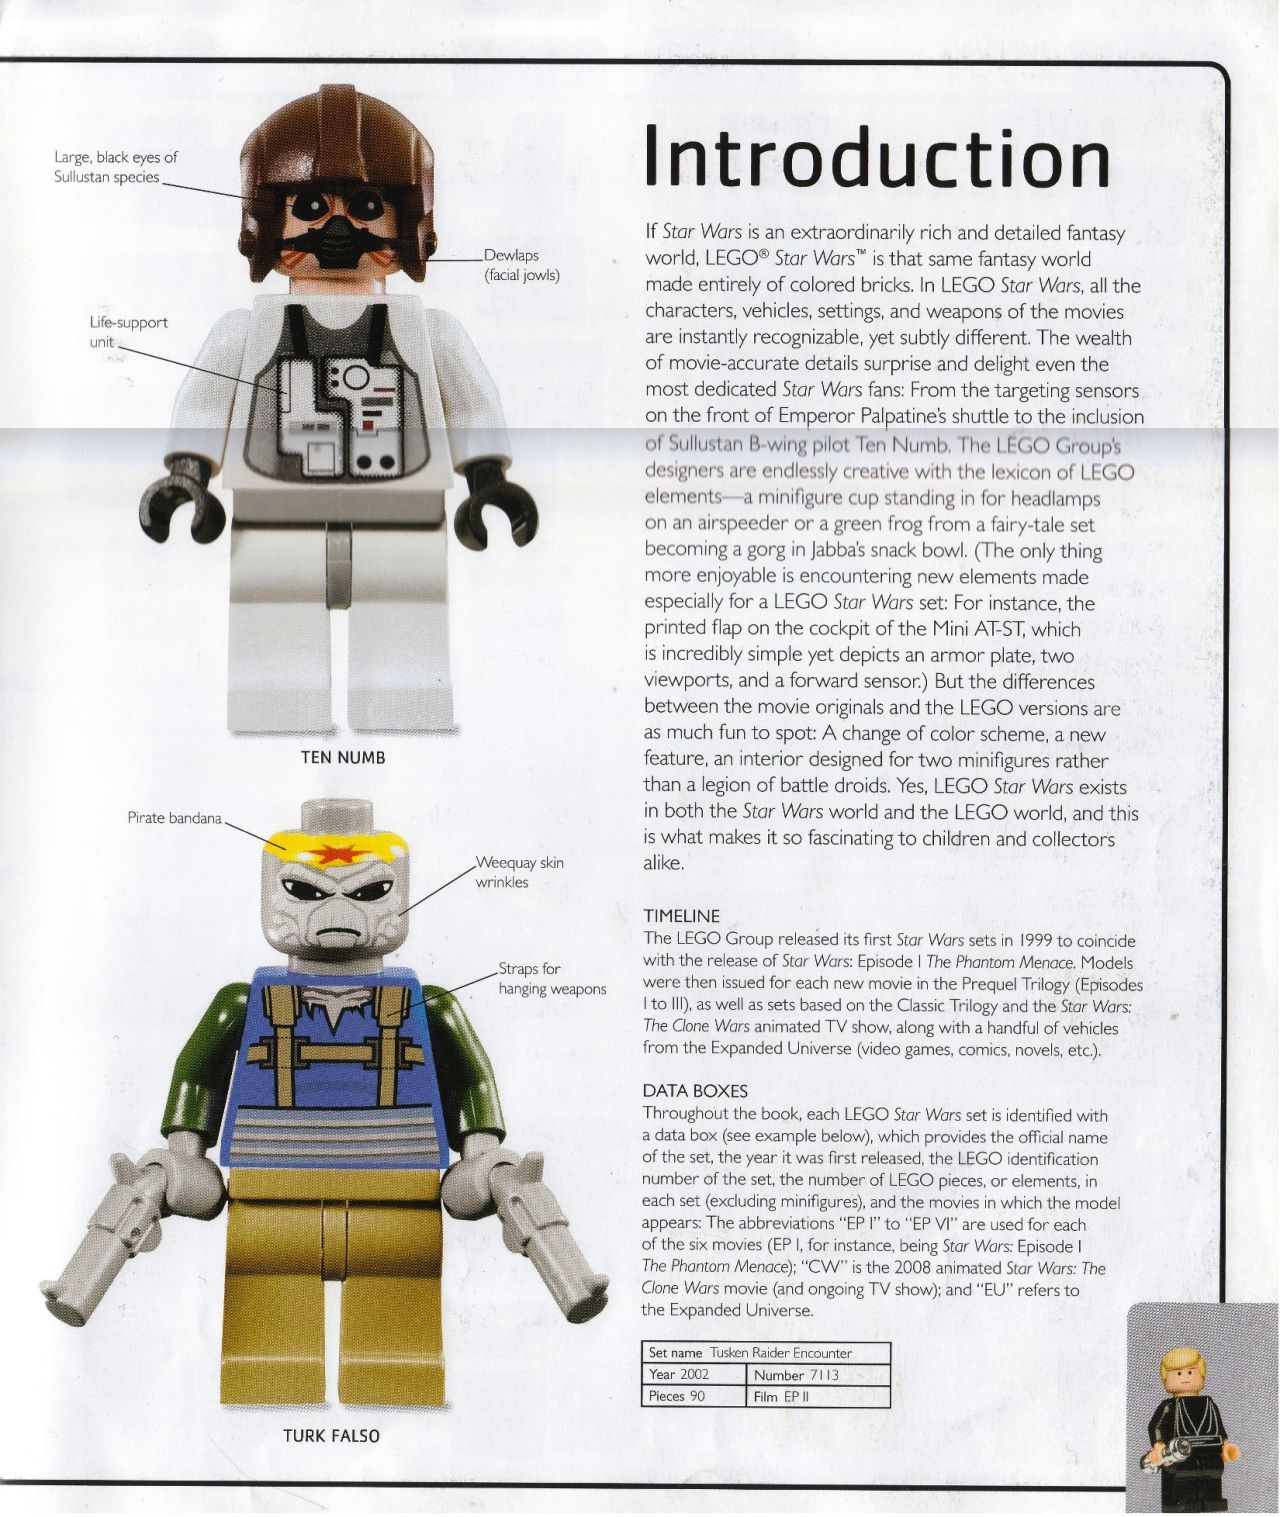 Lego Star Wars The Visual Dictionary 2009 Lego Star Wars The Visual Dictionary 2009 4